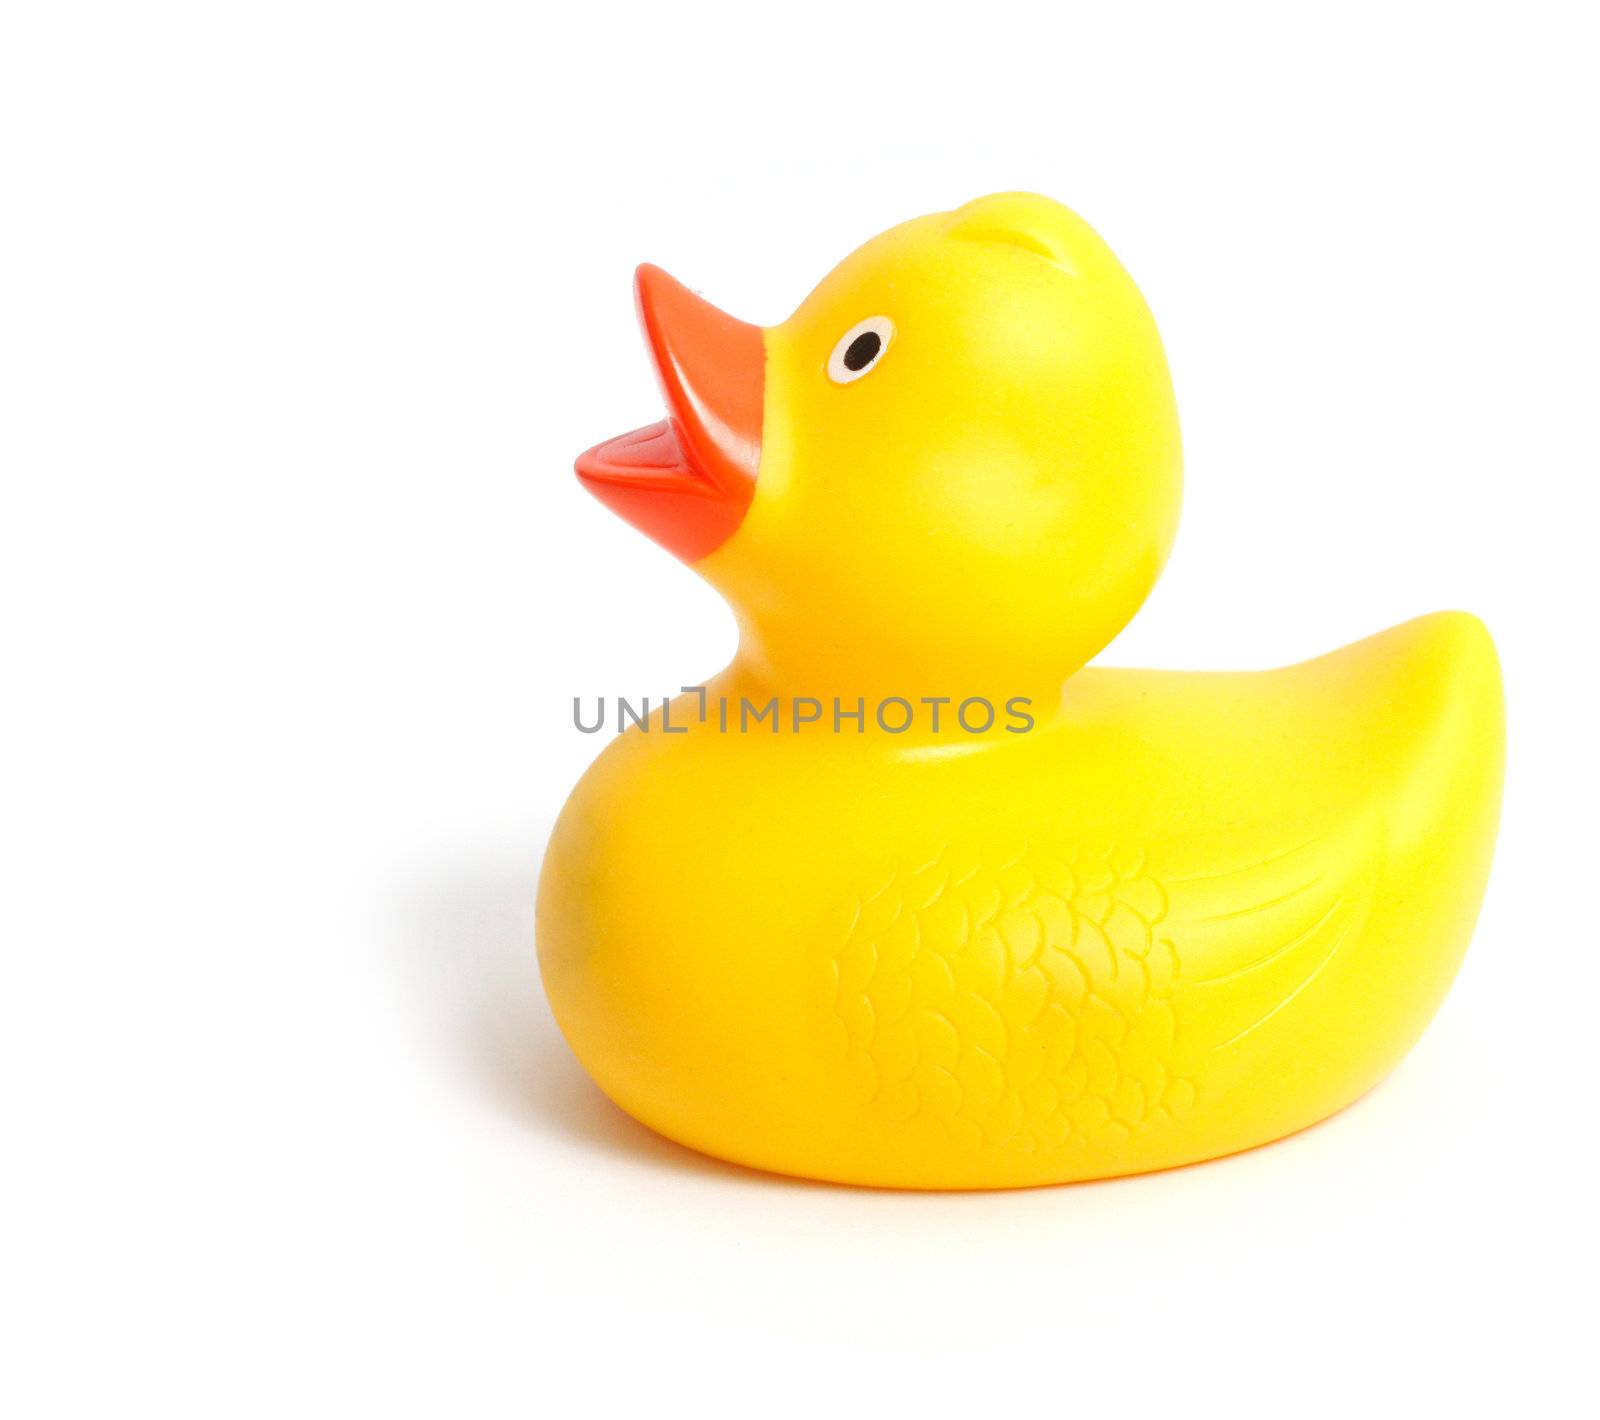 Rubber duck by leeser